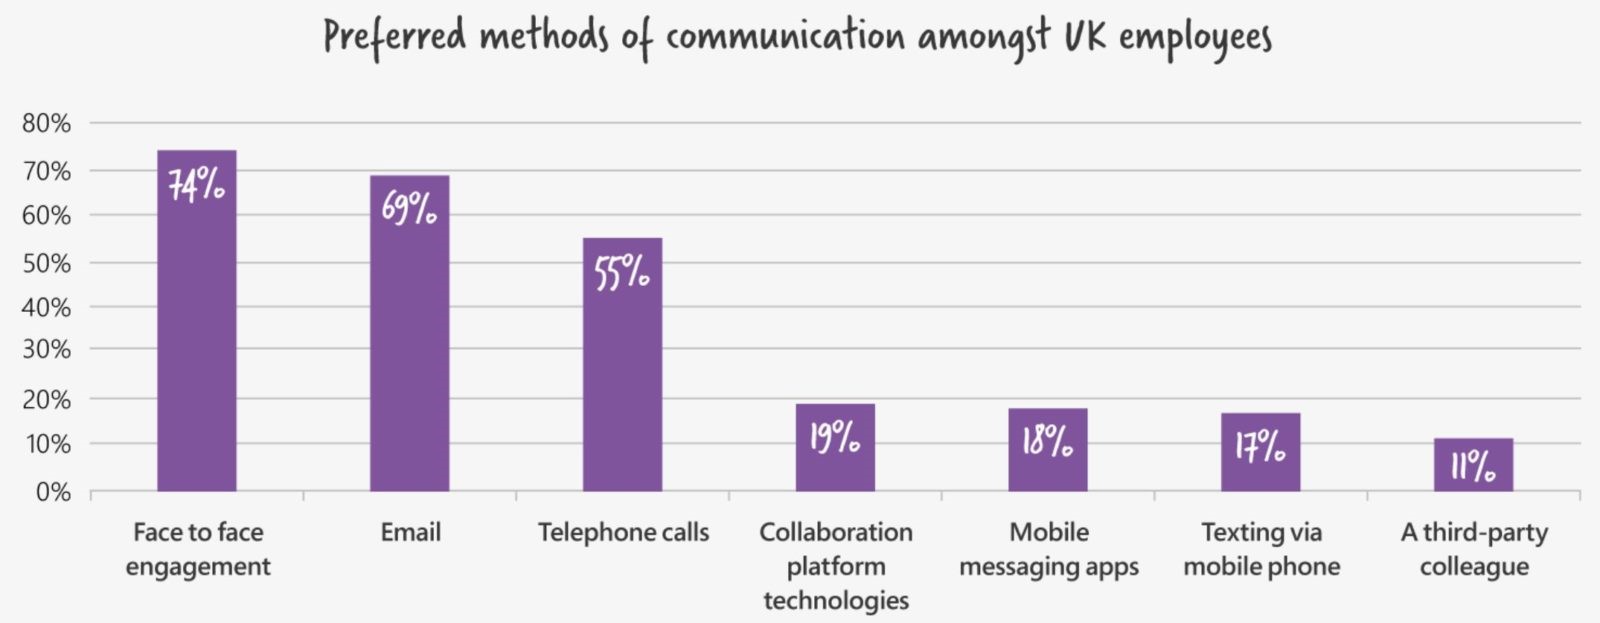 Preferred methods of communication amongst UK employees